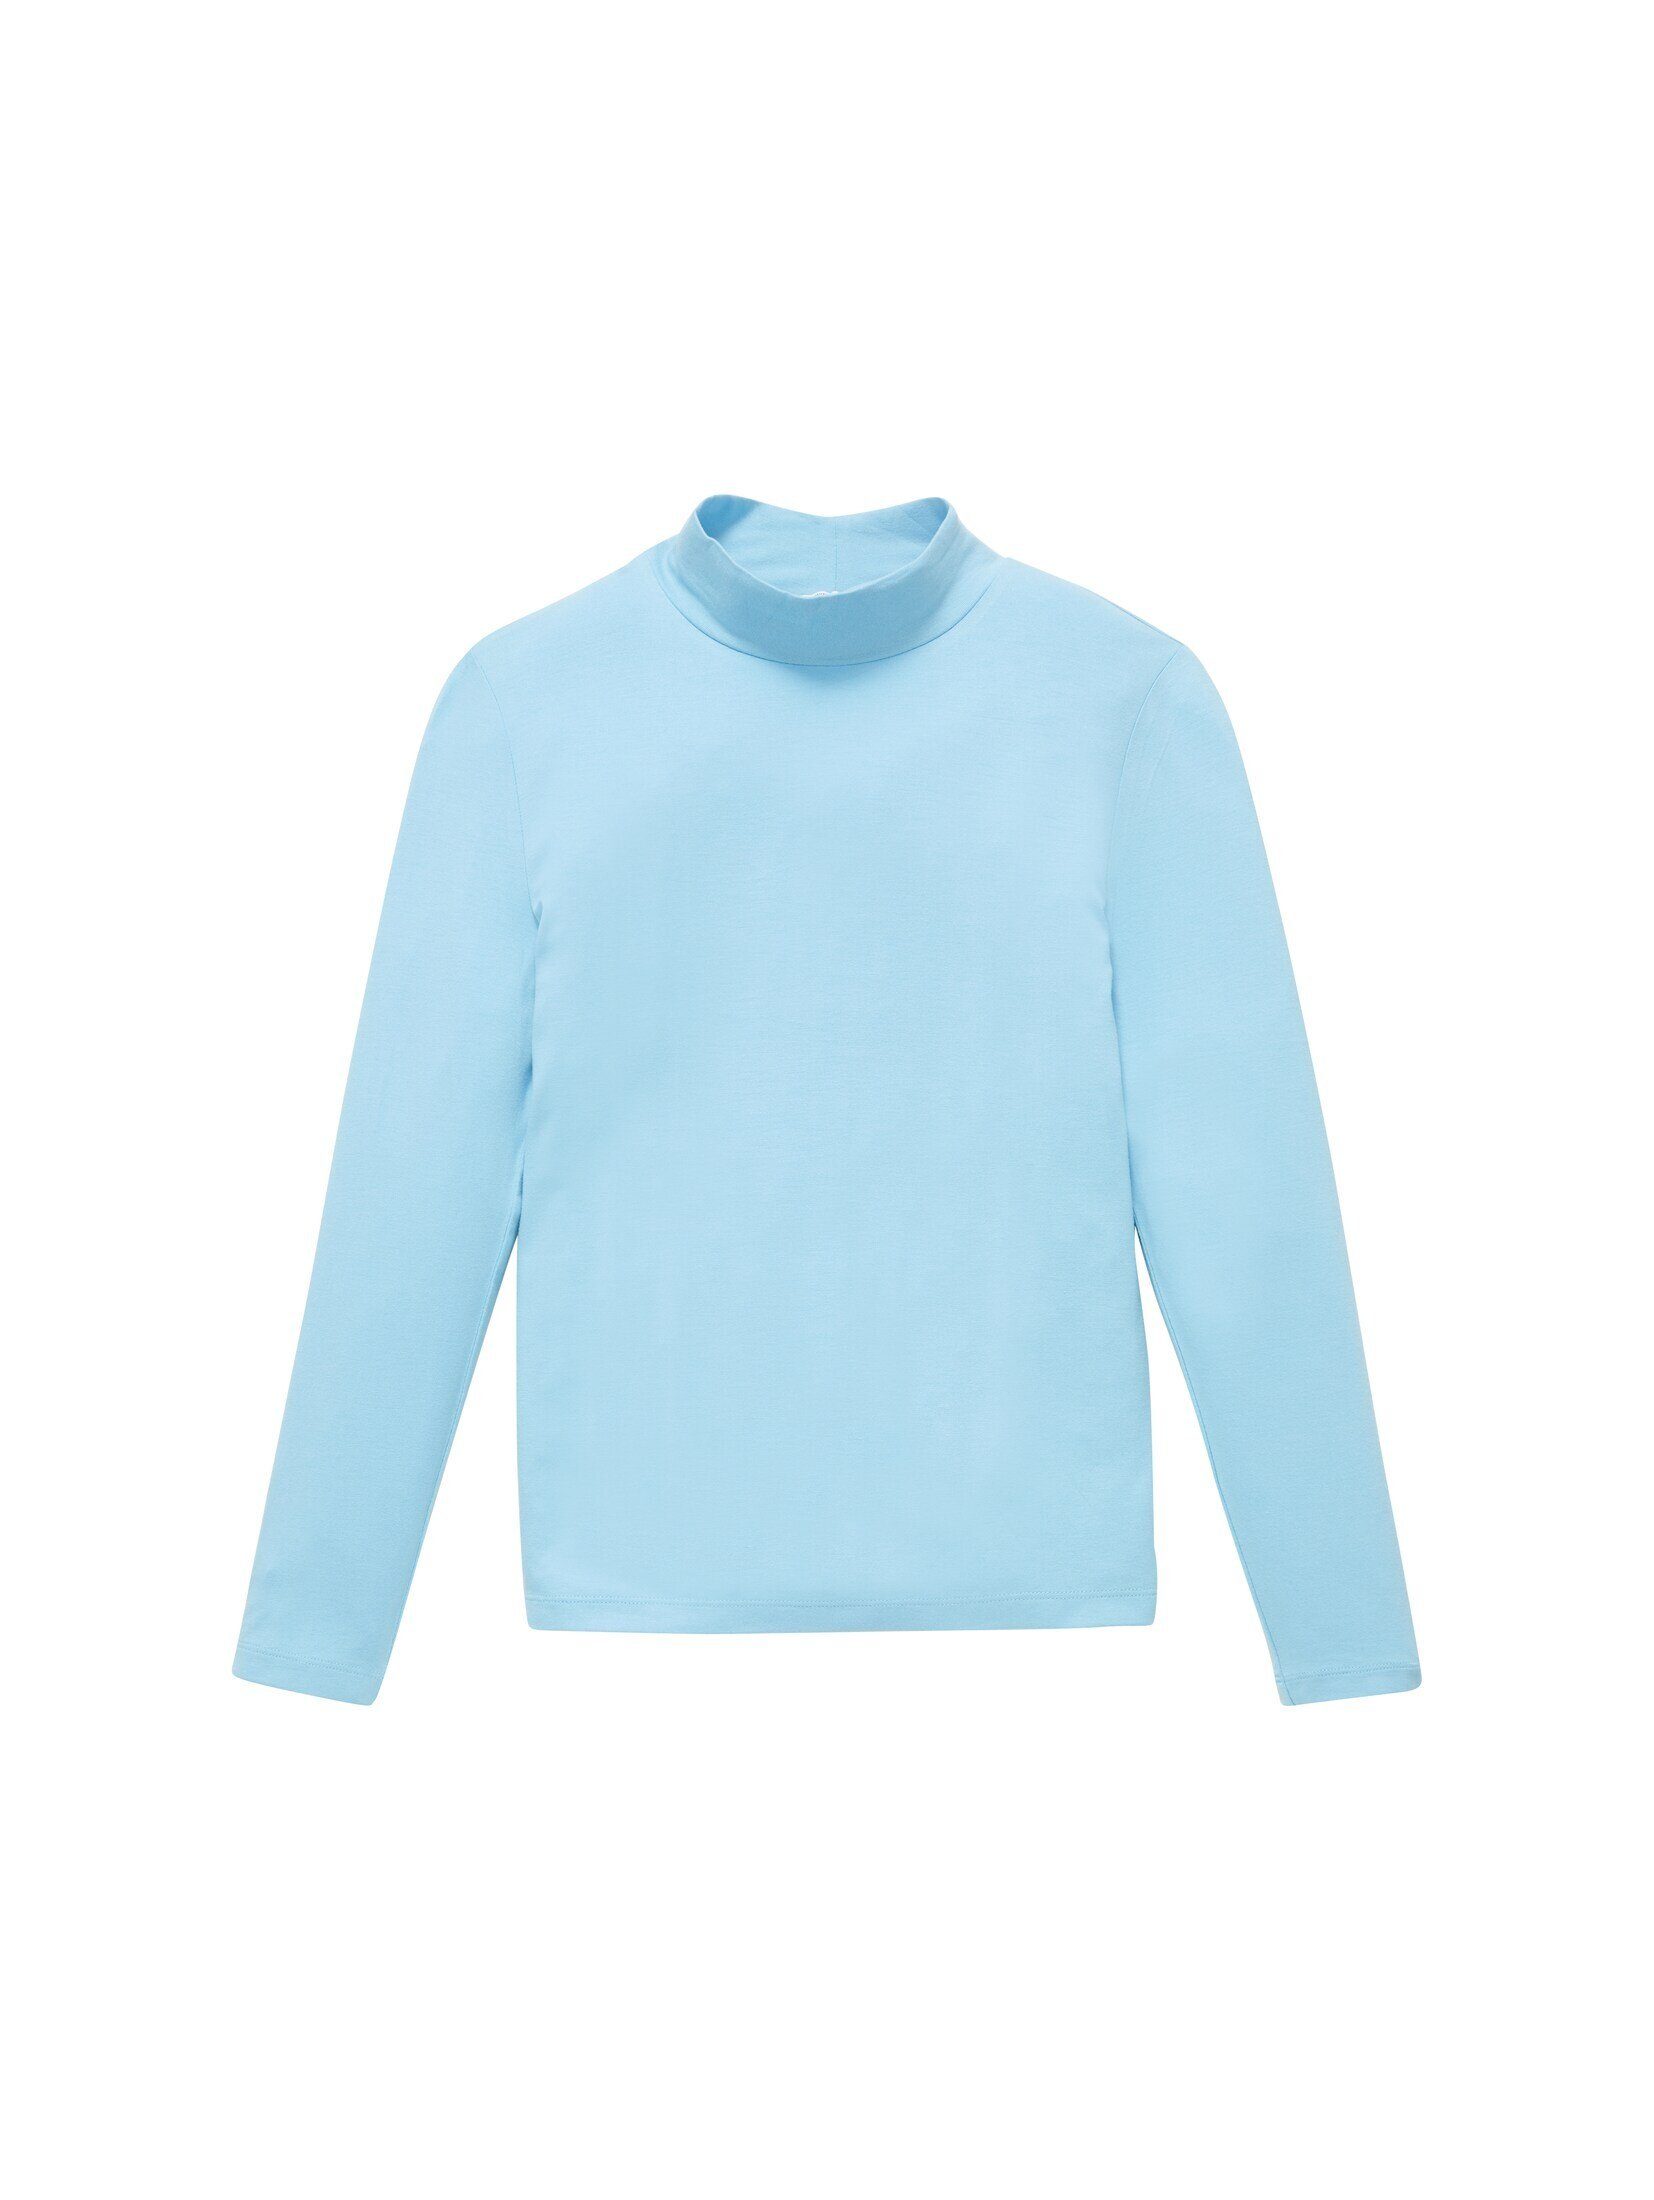 TOM TAILOR T-Shirt charming mit Langarmshirt LENZING(TM) blue ECOVERO(TM)